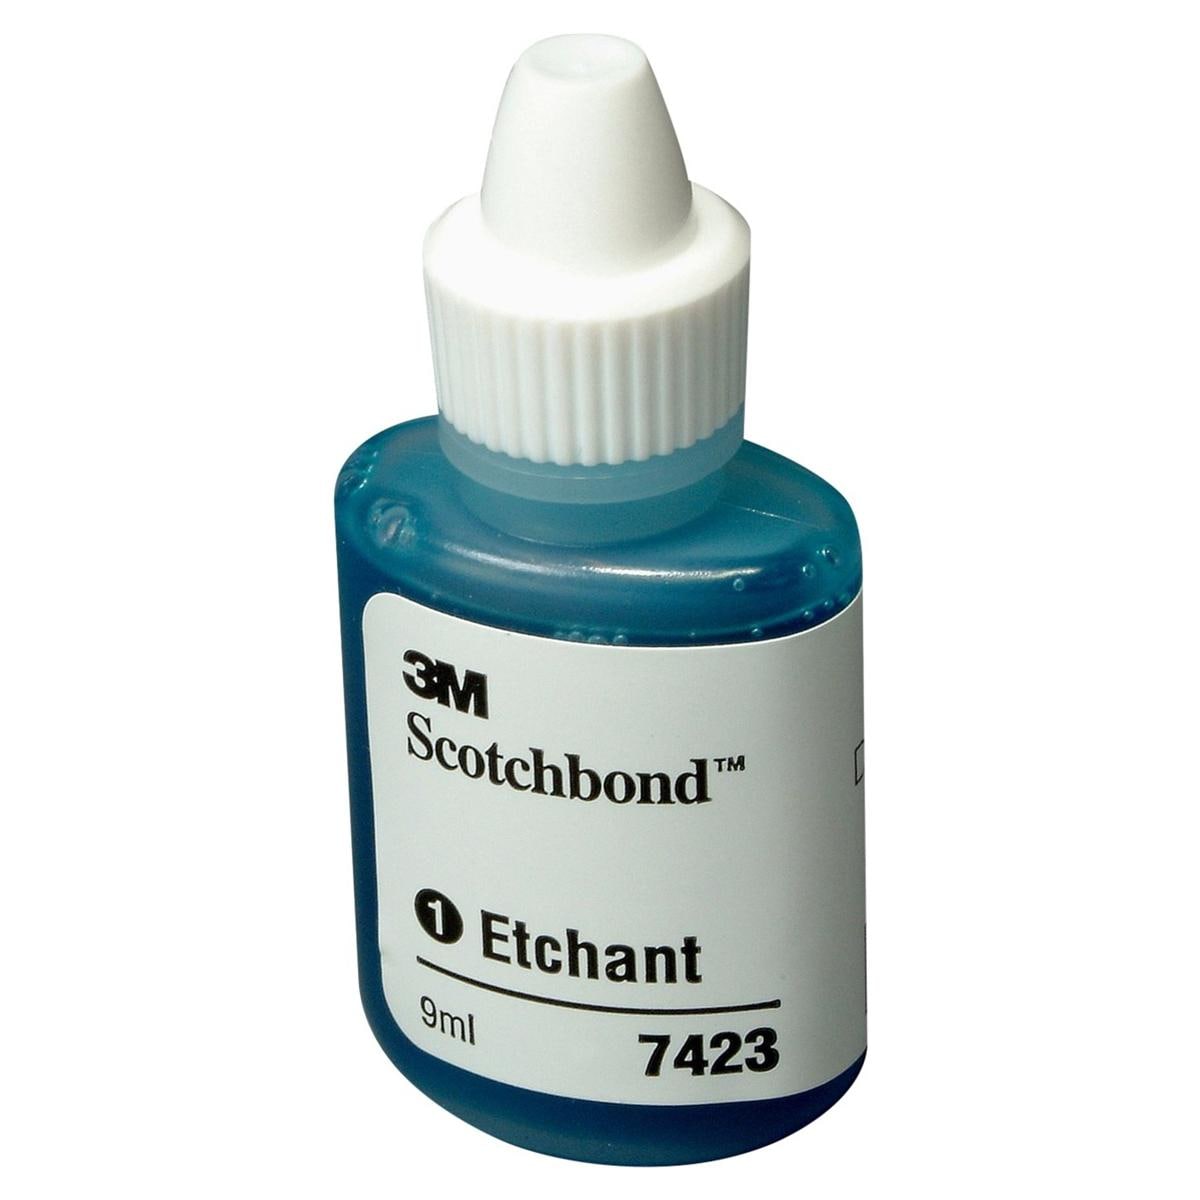 Adper Scotchbond Etchant - Flacon, 9 ml - 7423